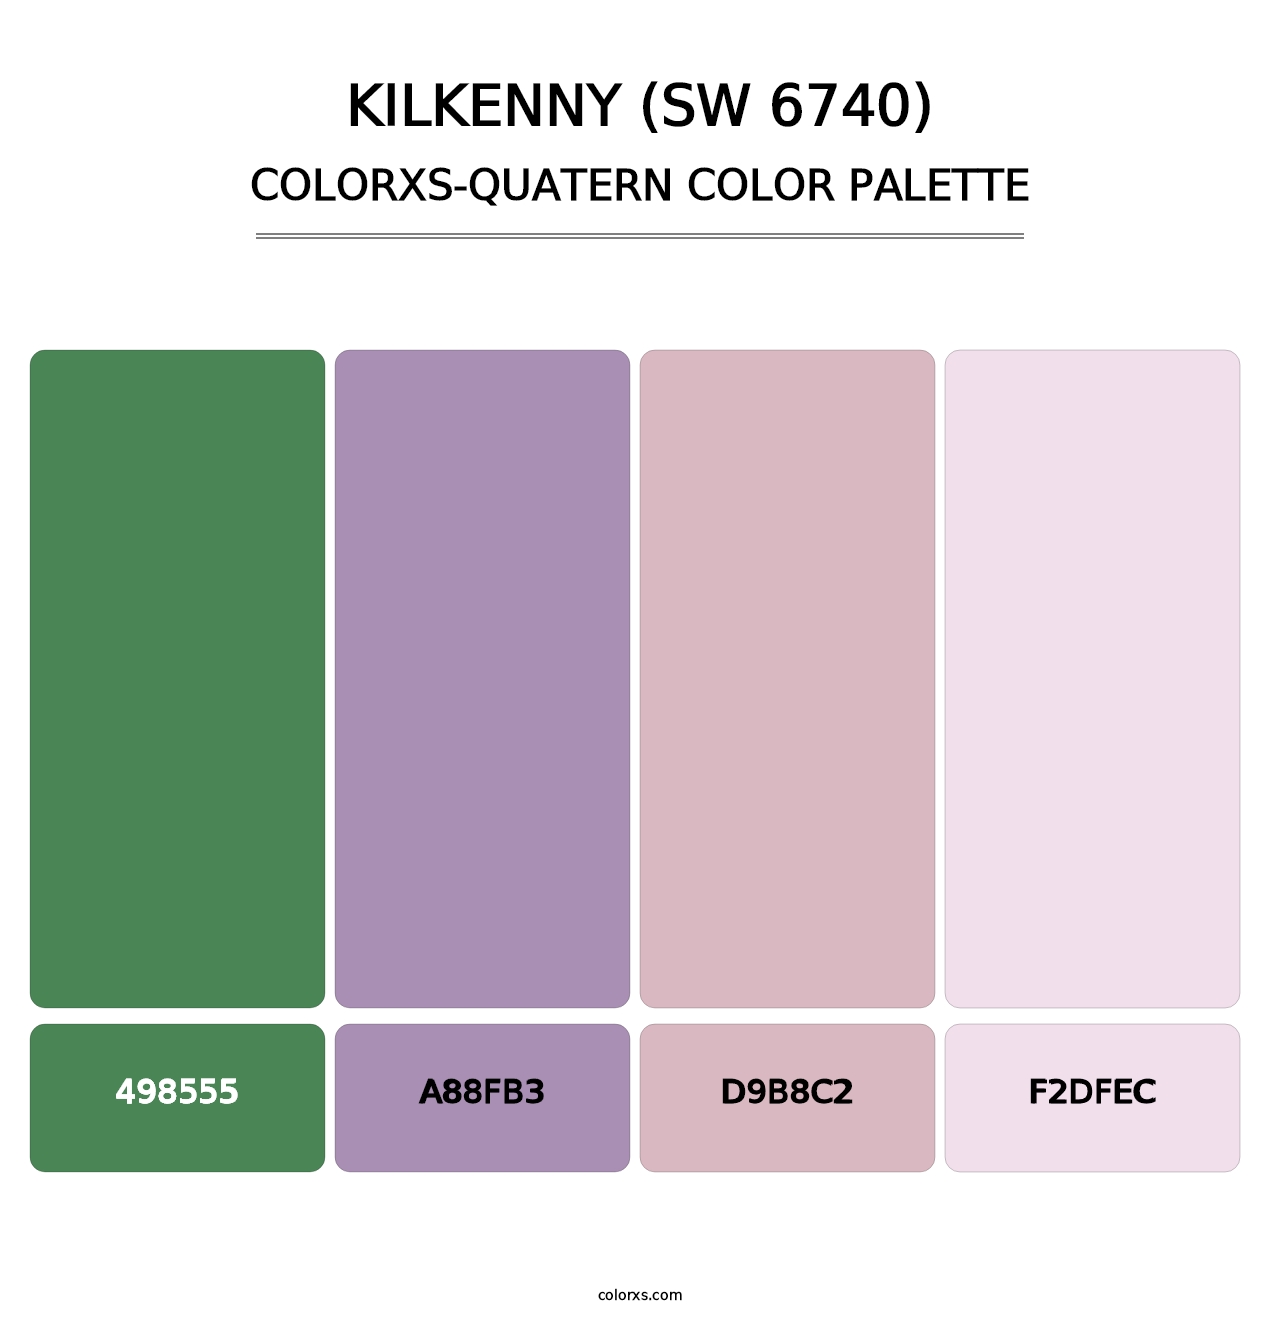 Kilkenny (SW 6740) - Colorxs Quatern Palette